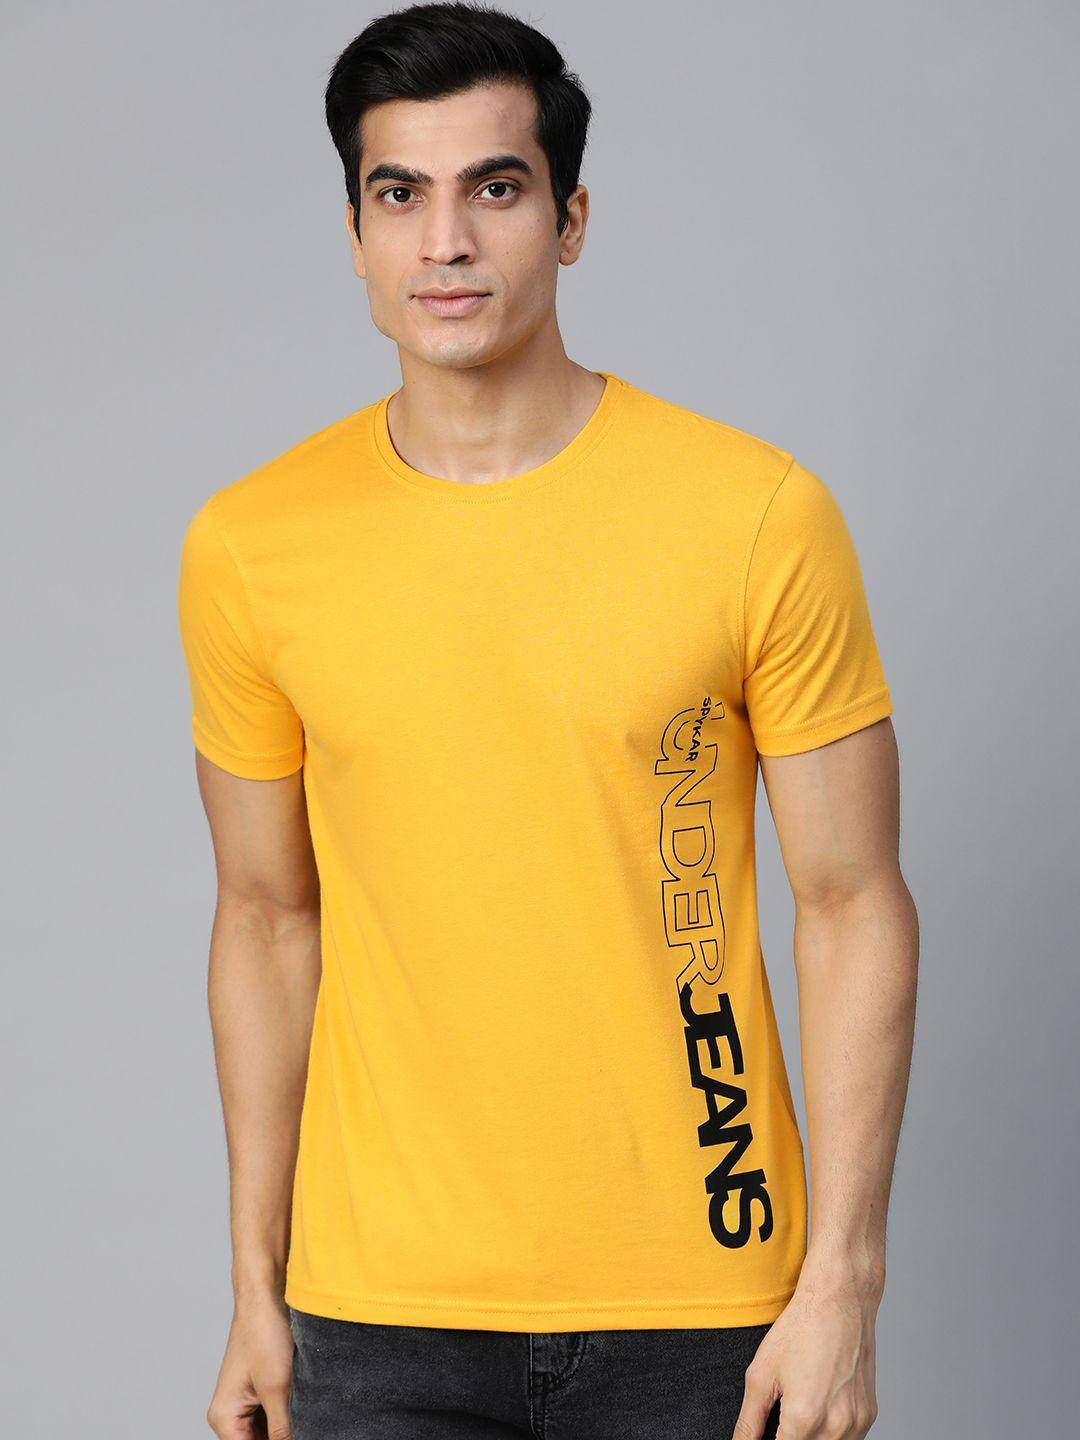 underjeans-by-spykar-men-yellow-&-black-printed-detail-round-neck-t-shirt